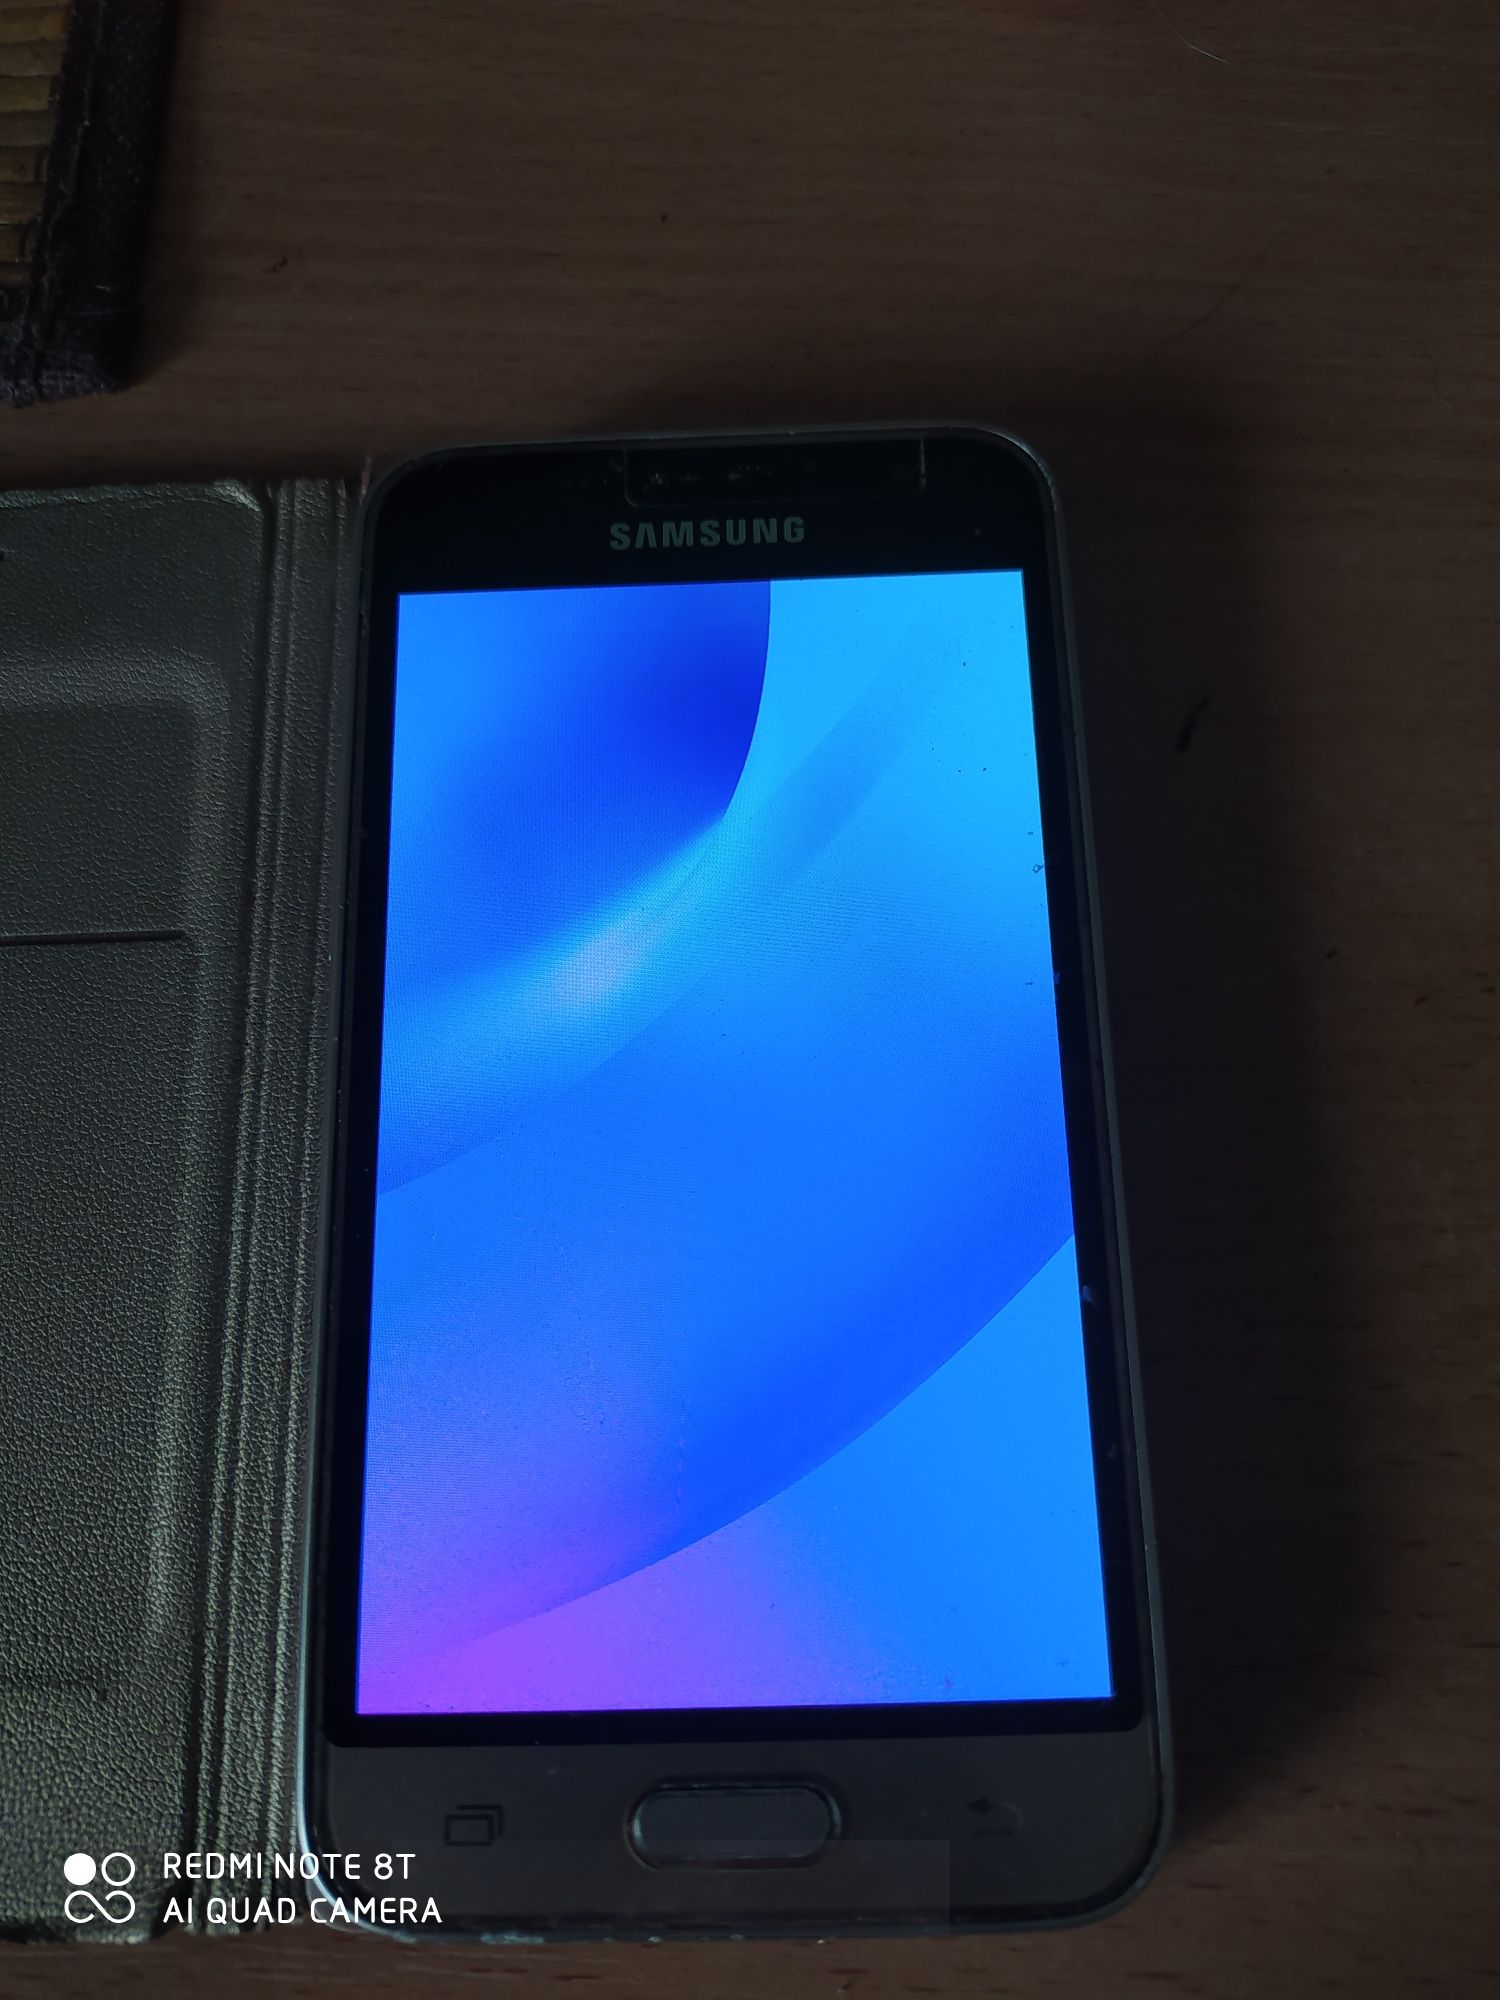 Samsung Galaxy J1 . Черный